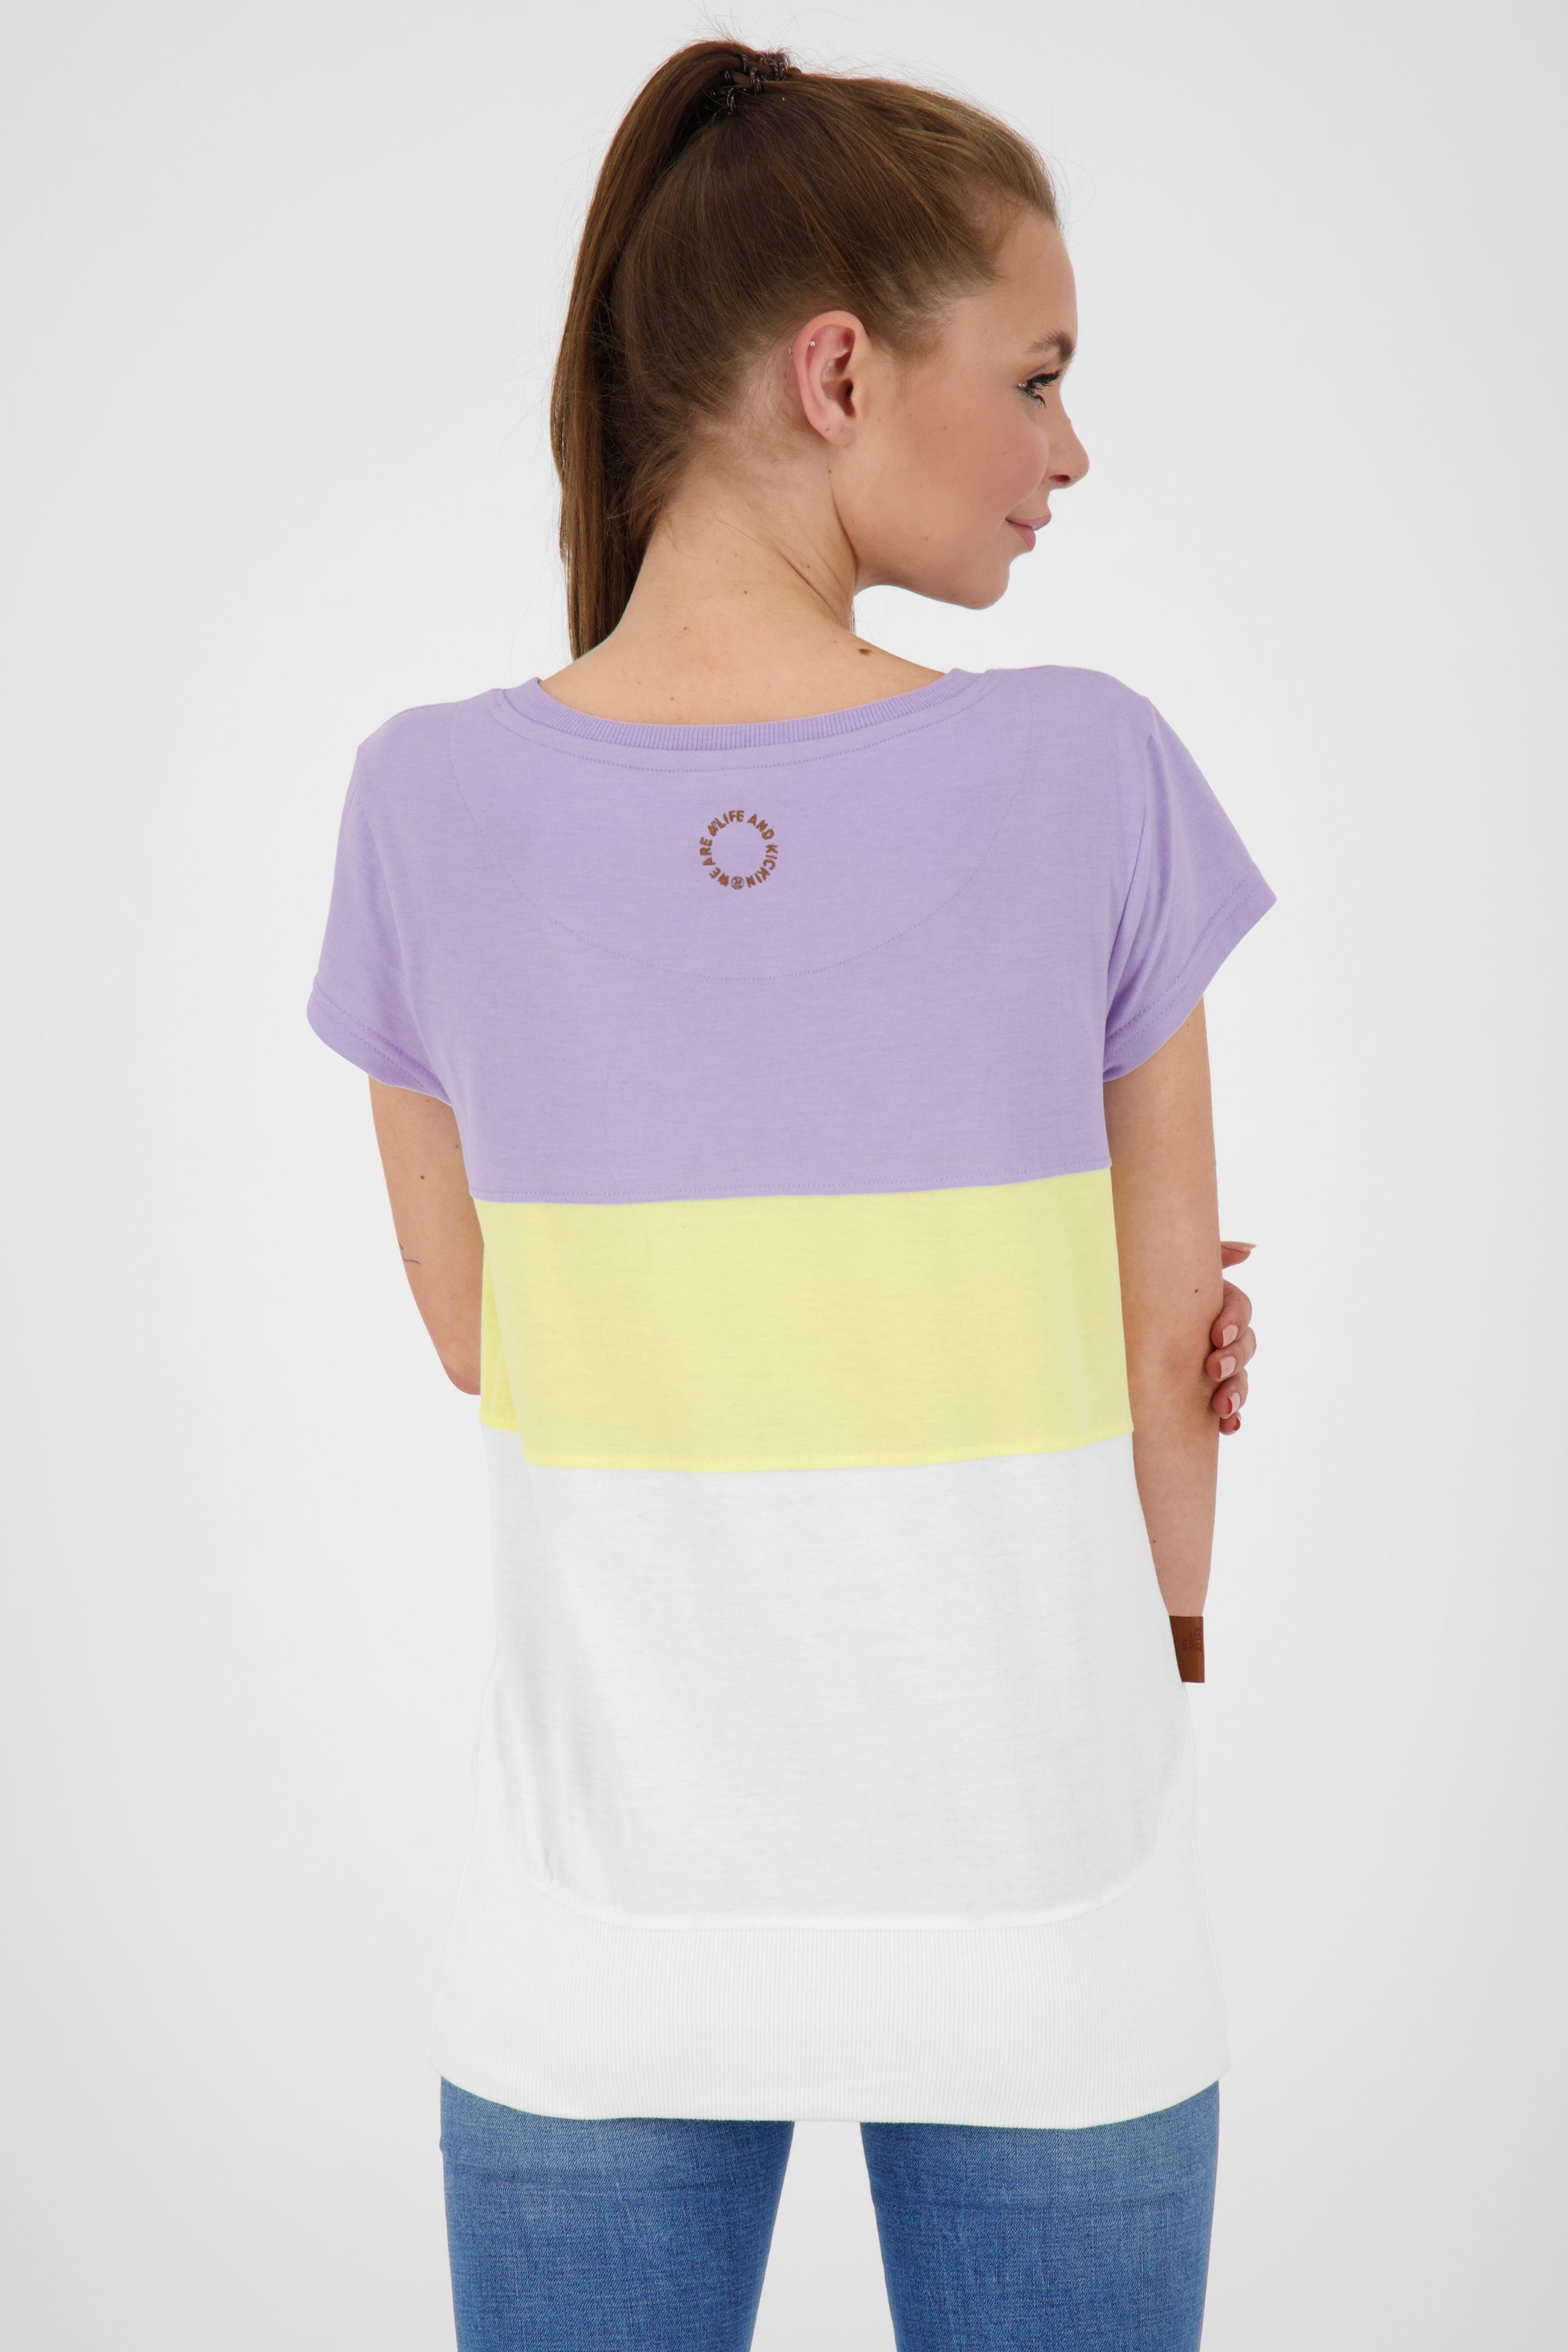 CoraAK Alife & lavender Kickin T-Shirt Damen Shirt T-Shirt